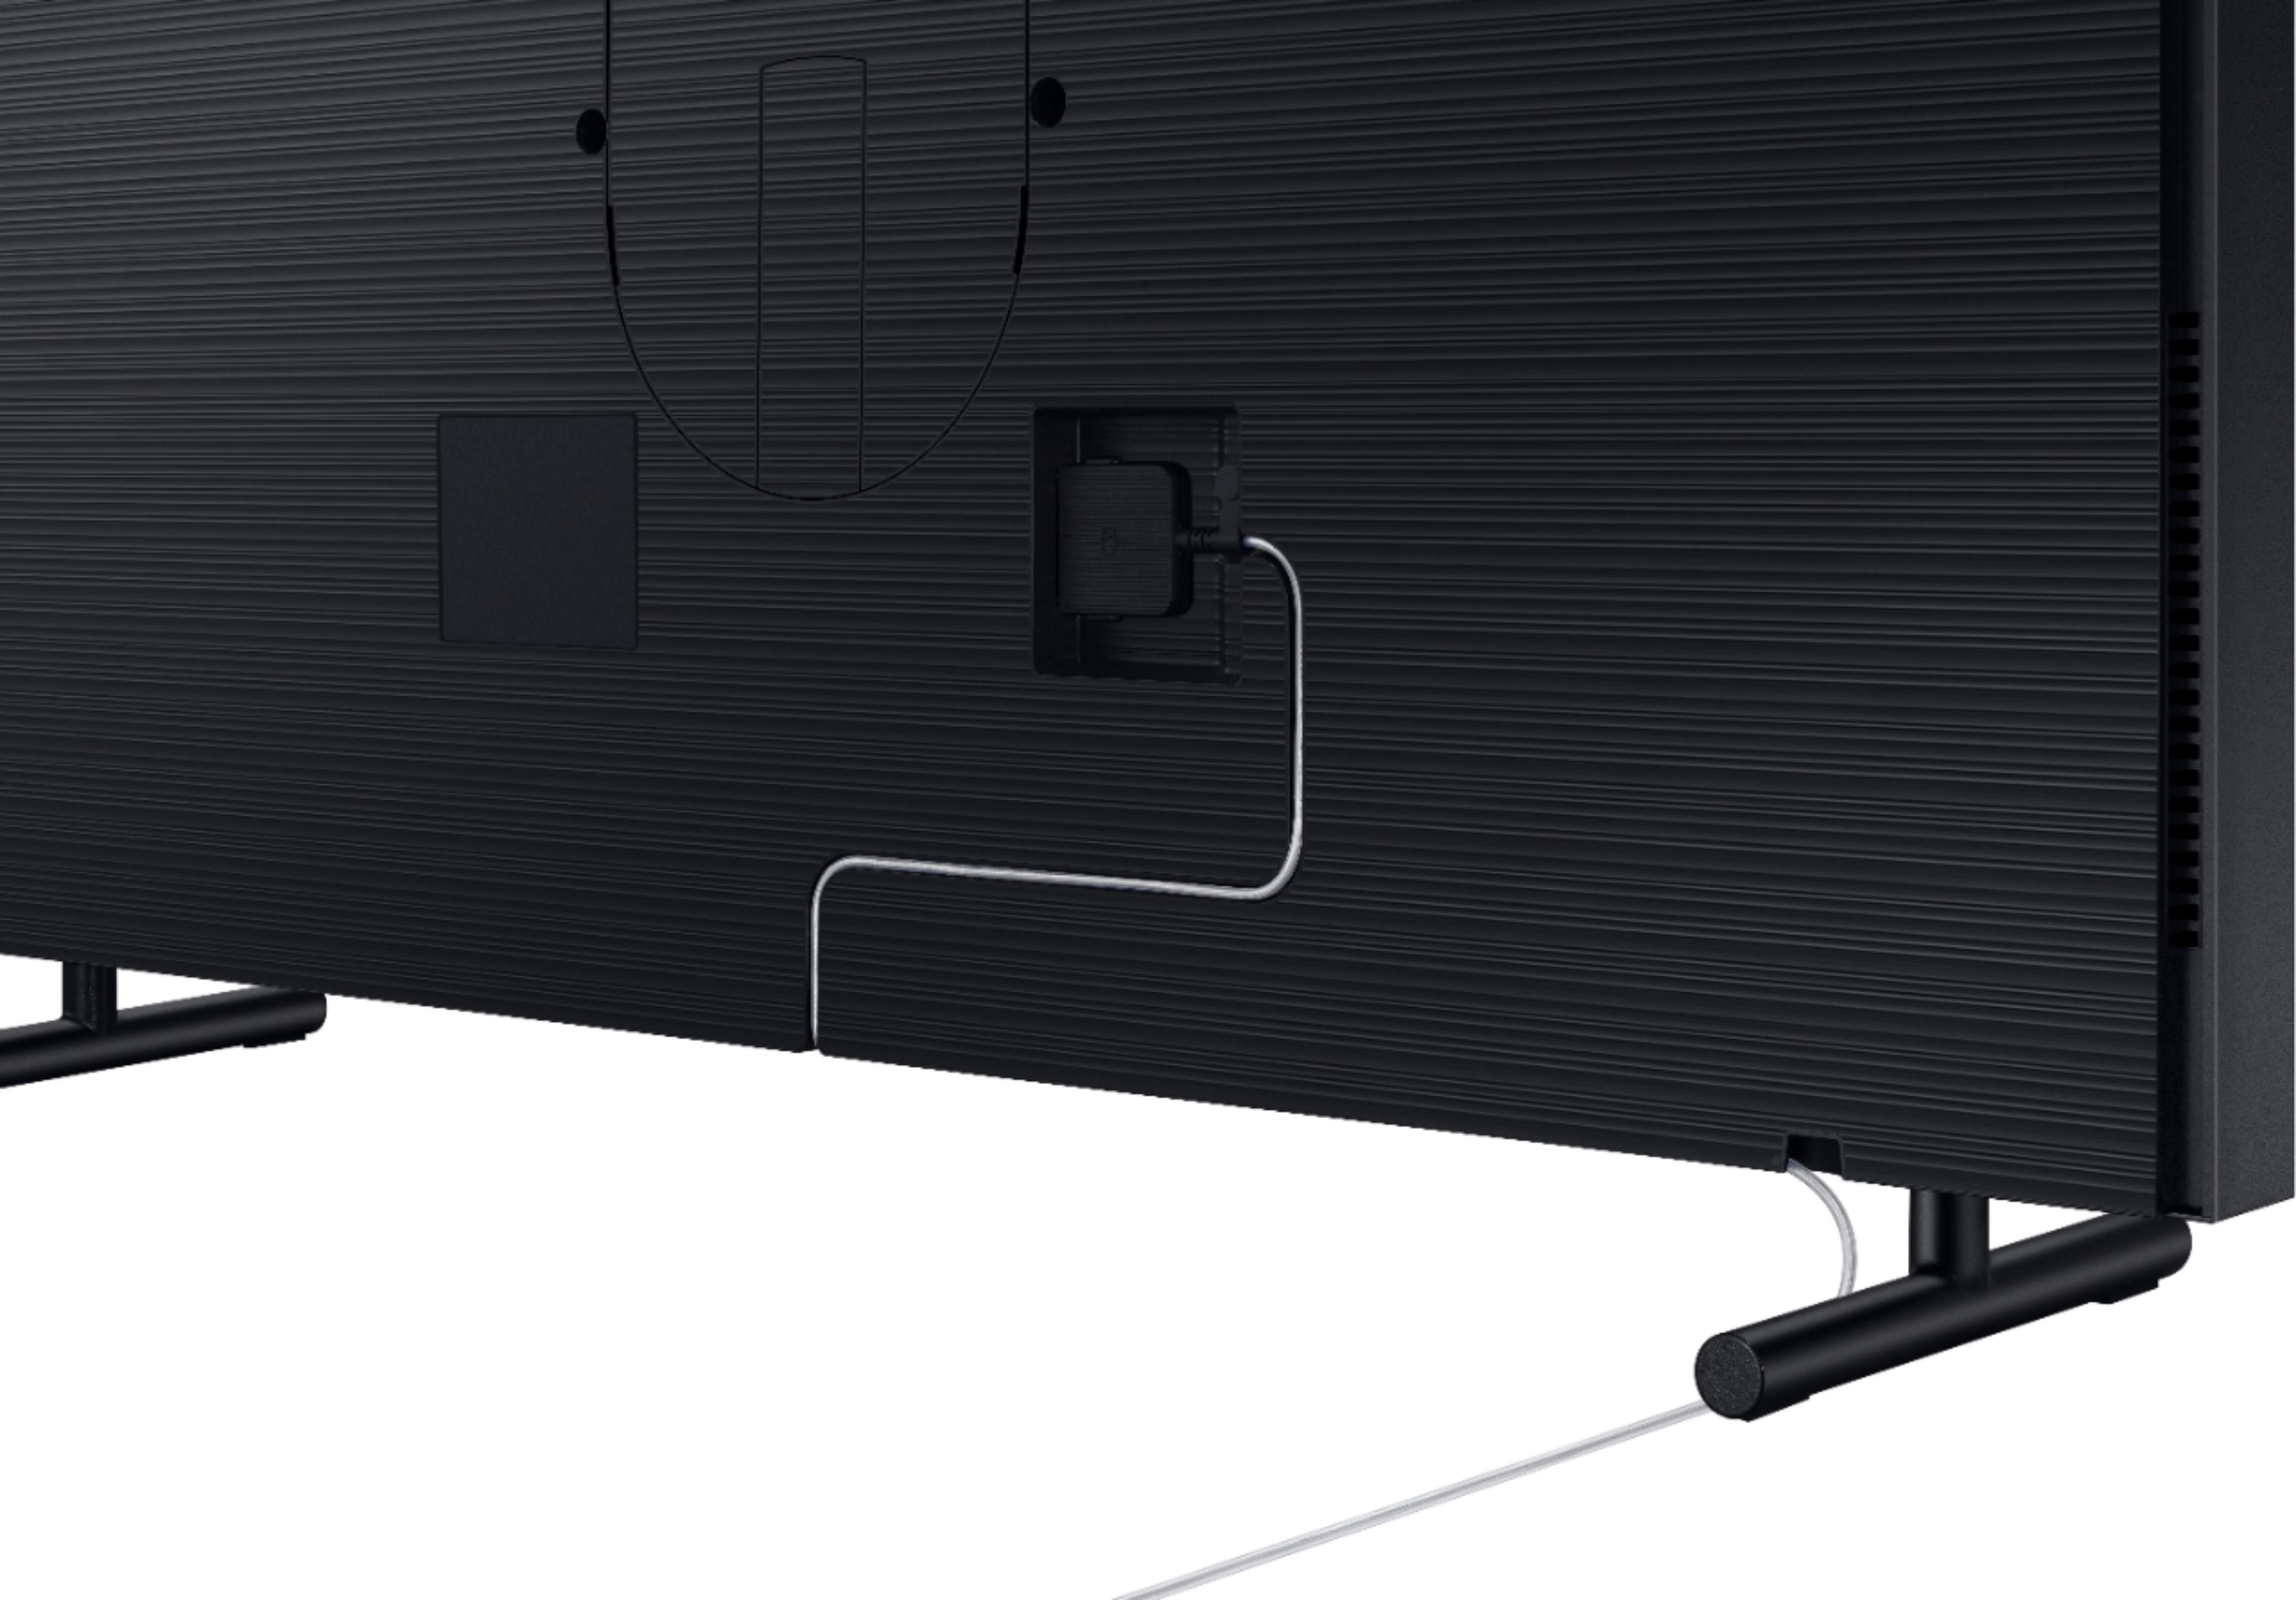 Heel vaardigheid Generator Best Buy: Samsung 49" Class LED The Frame Series 2160p Smart 4K UHD TV with  HDR QN49LS03RAFXZA